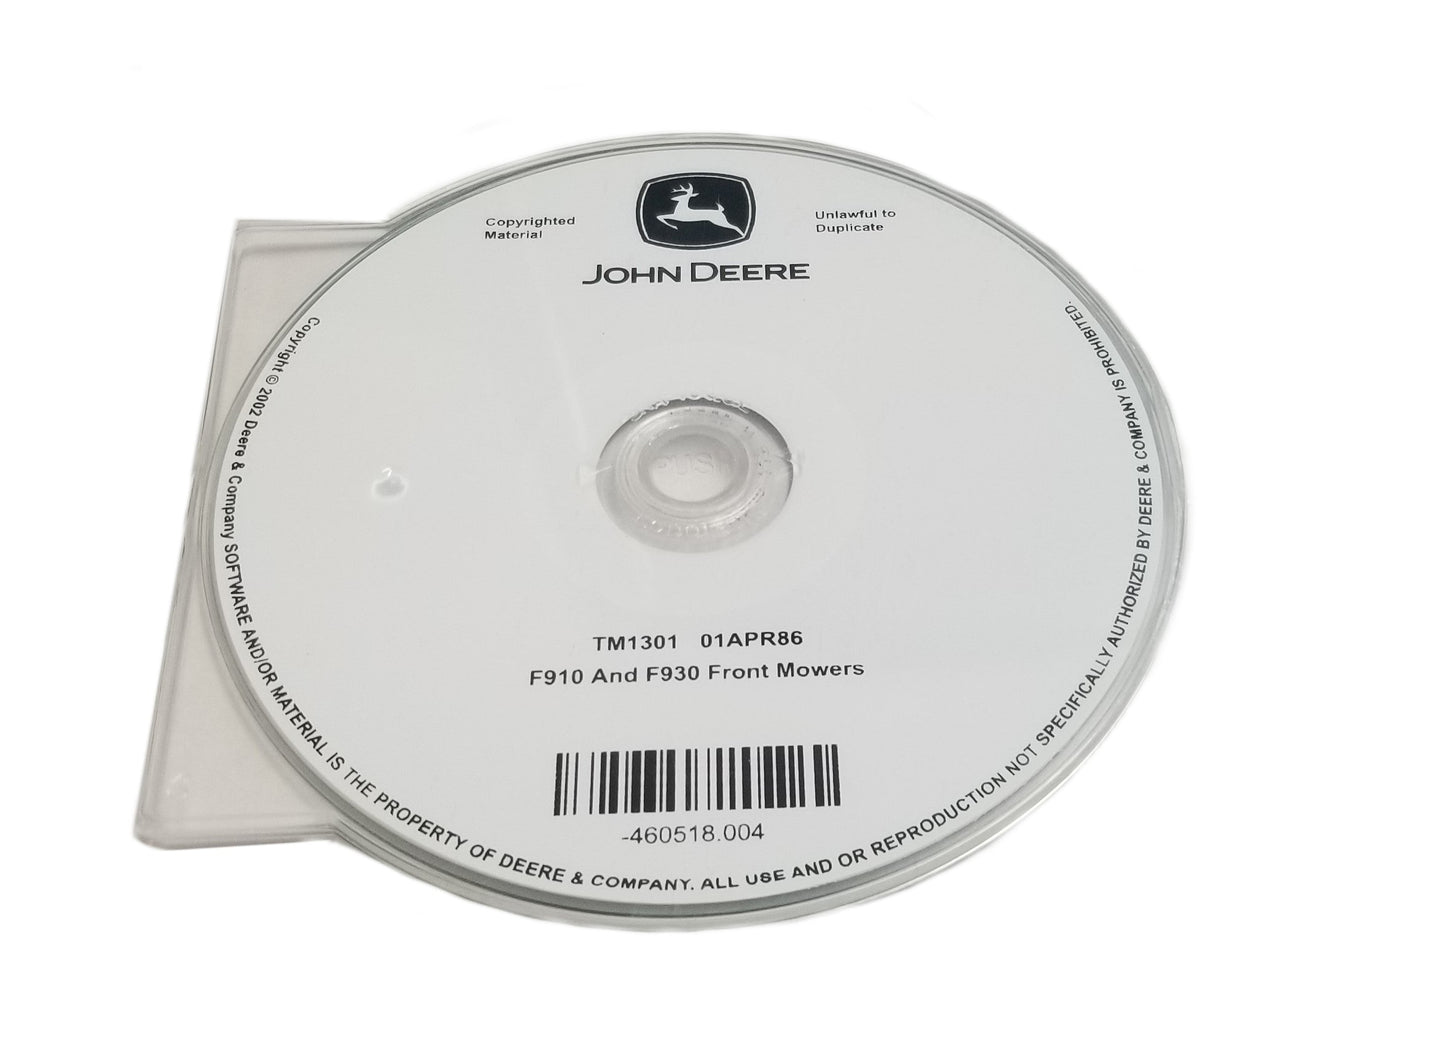 John Deere F910/F930 Front Mowers Technical CD Manual - TM1301CD